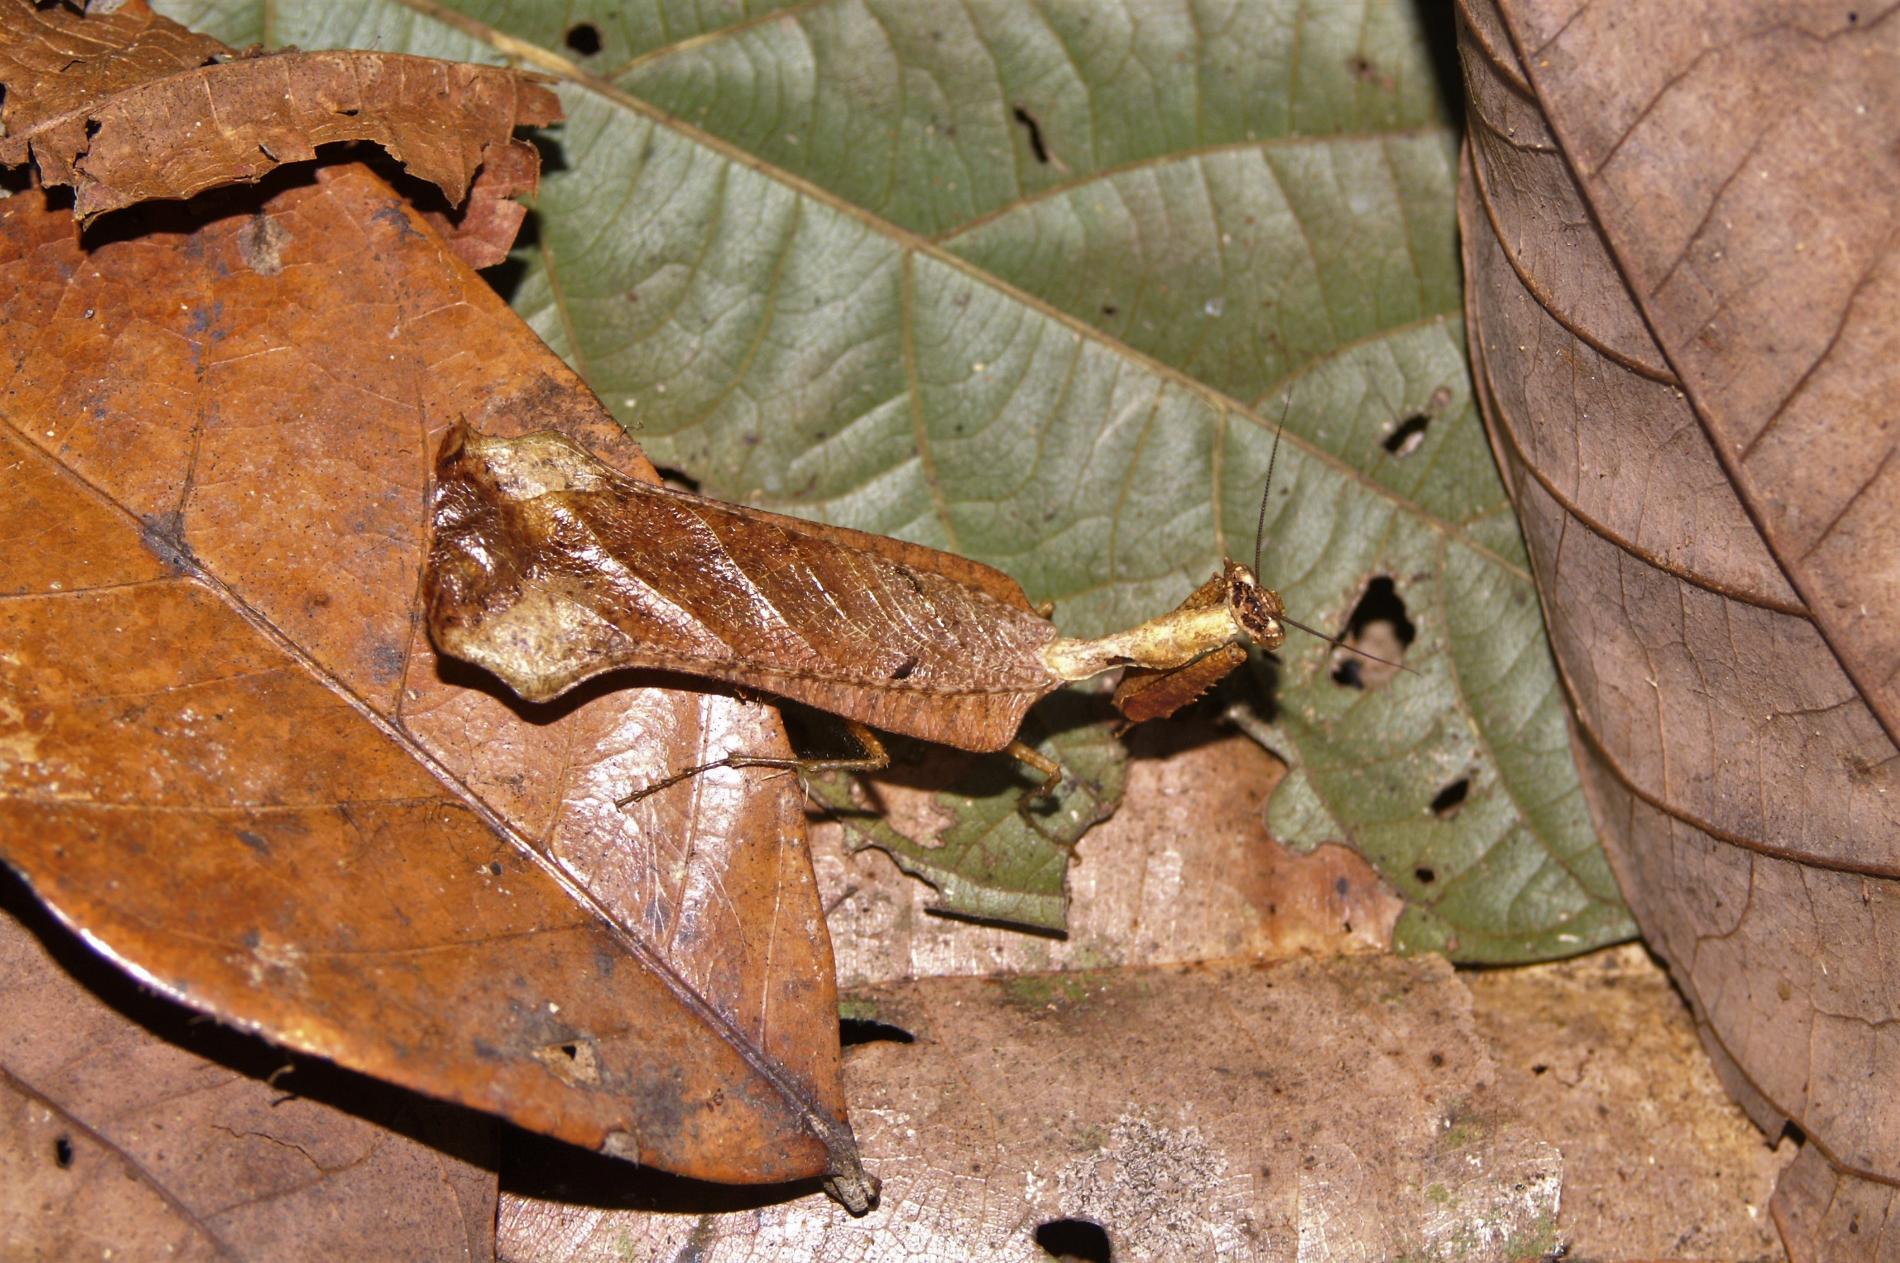 *Pseudacanthops spinulosus* mâle, Papaïchton (Guyane) © Nicolas Moulin